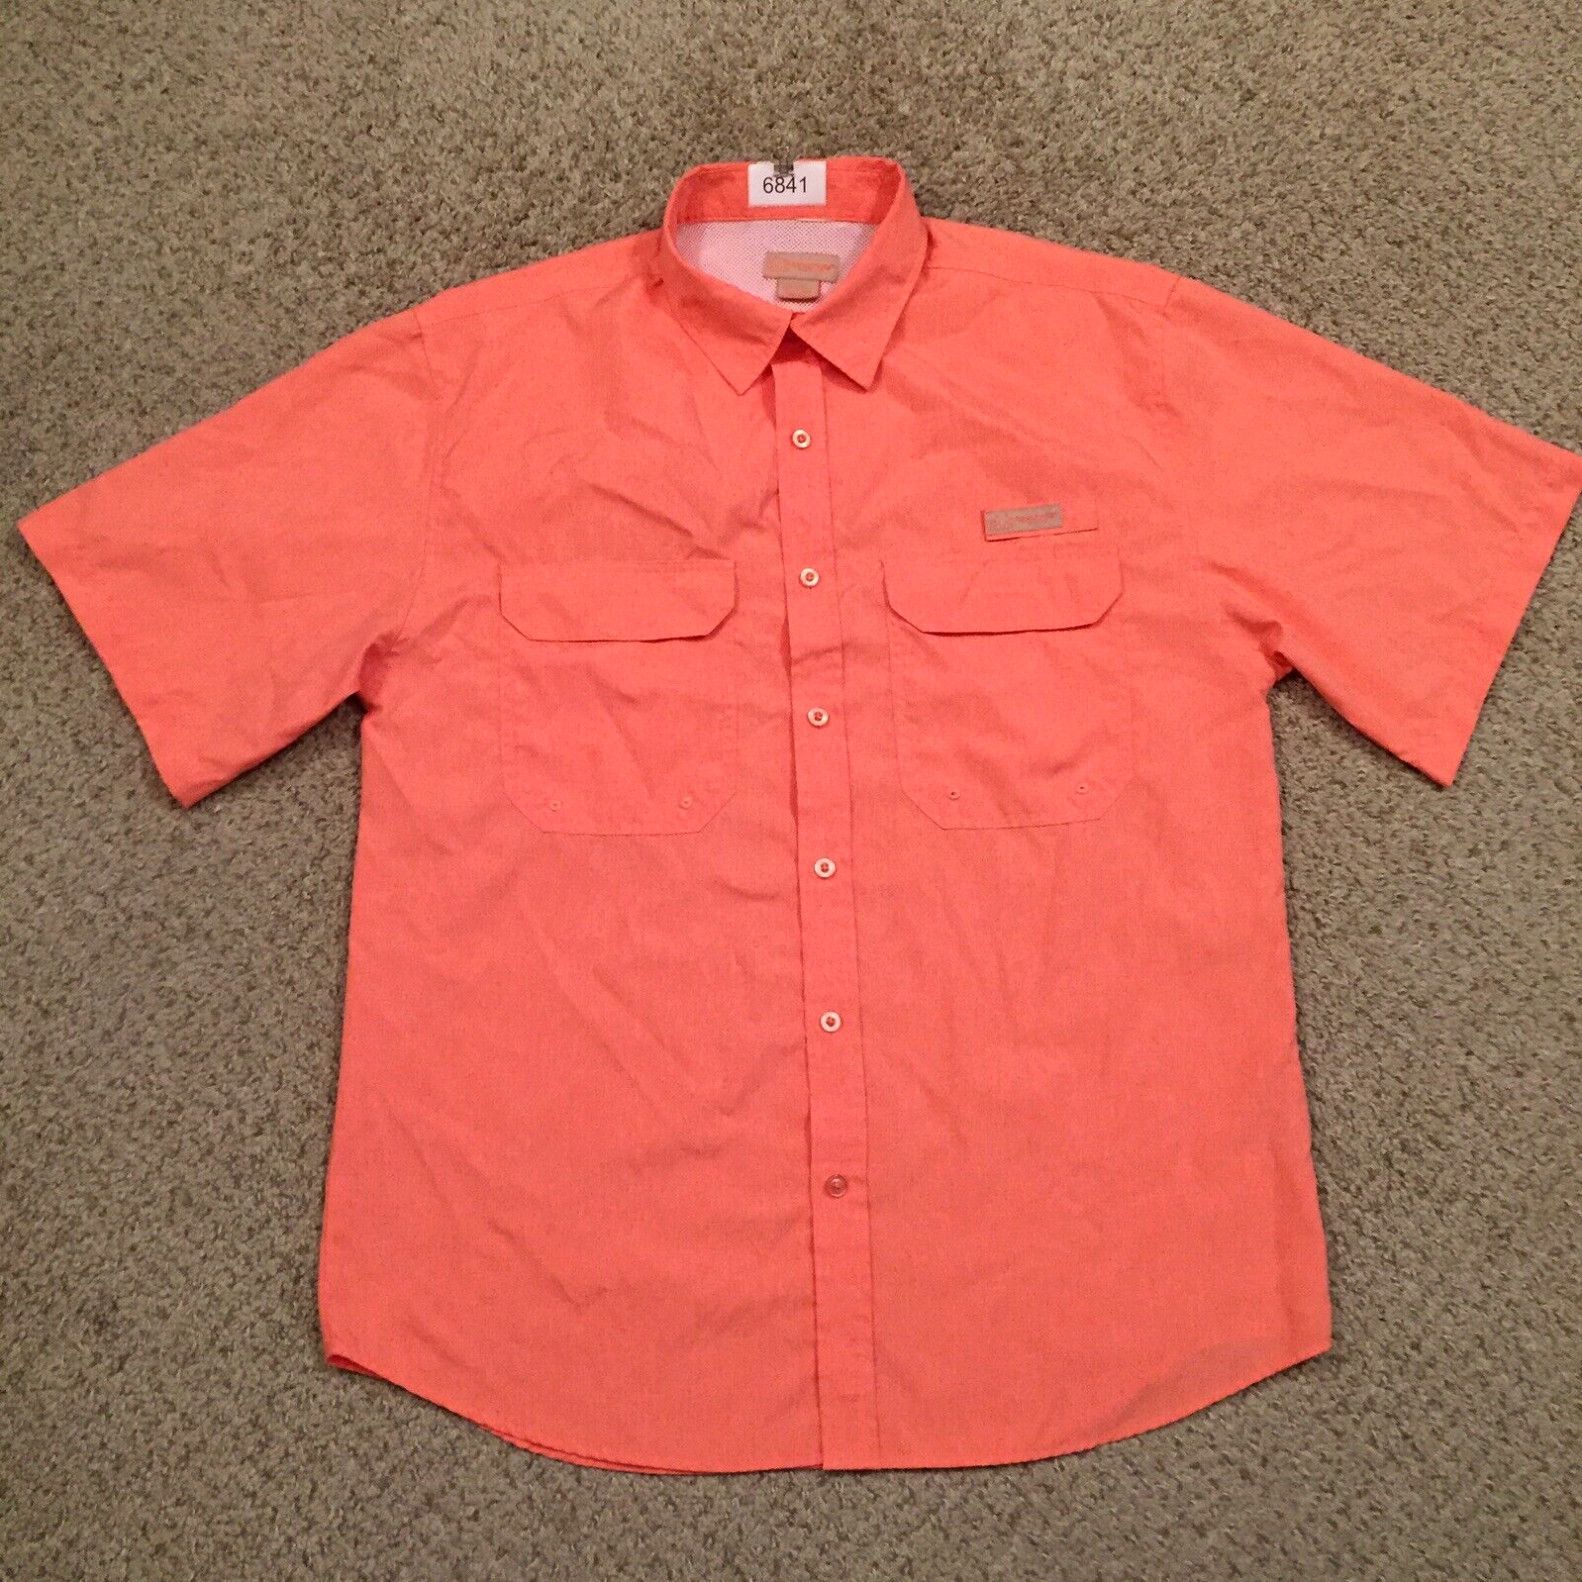 Realtree Real Tree Fishing Shirt Mens Large Pink Short Sleeve Button Up  Breathable